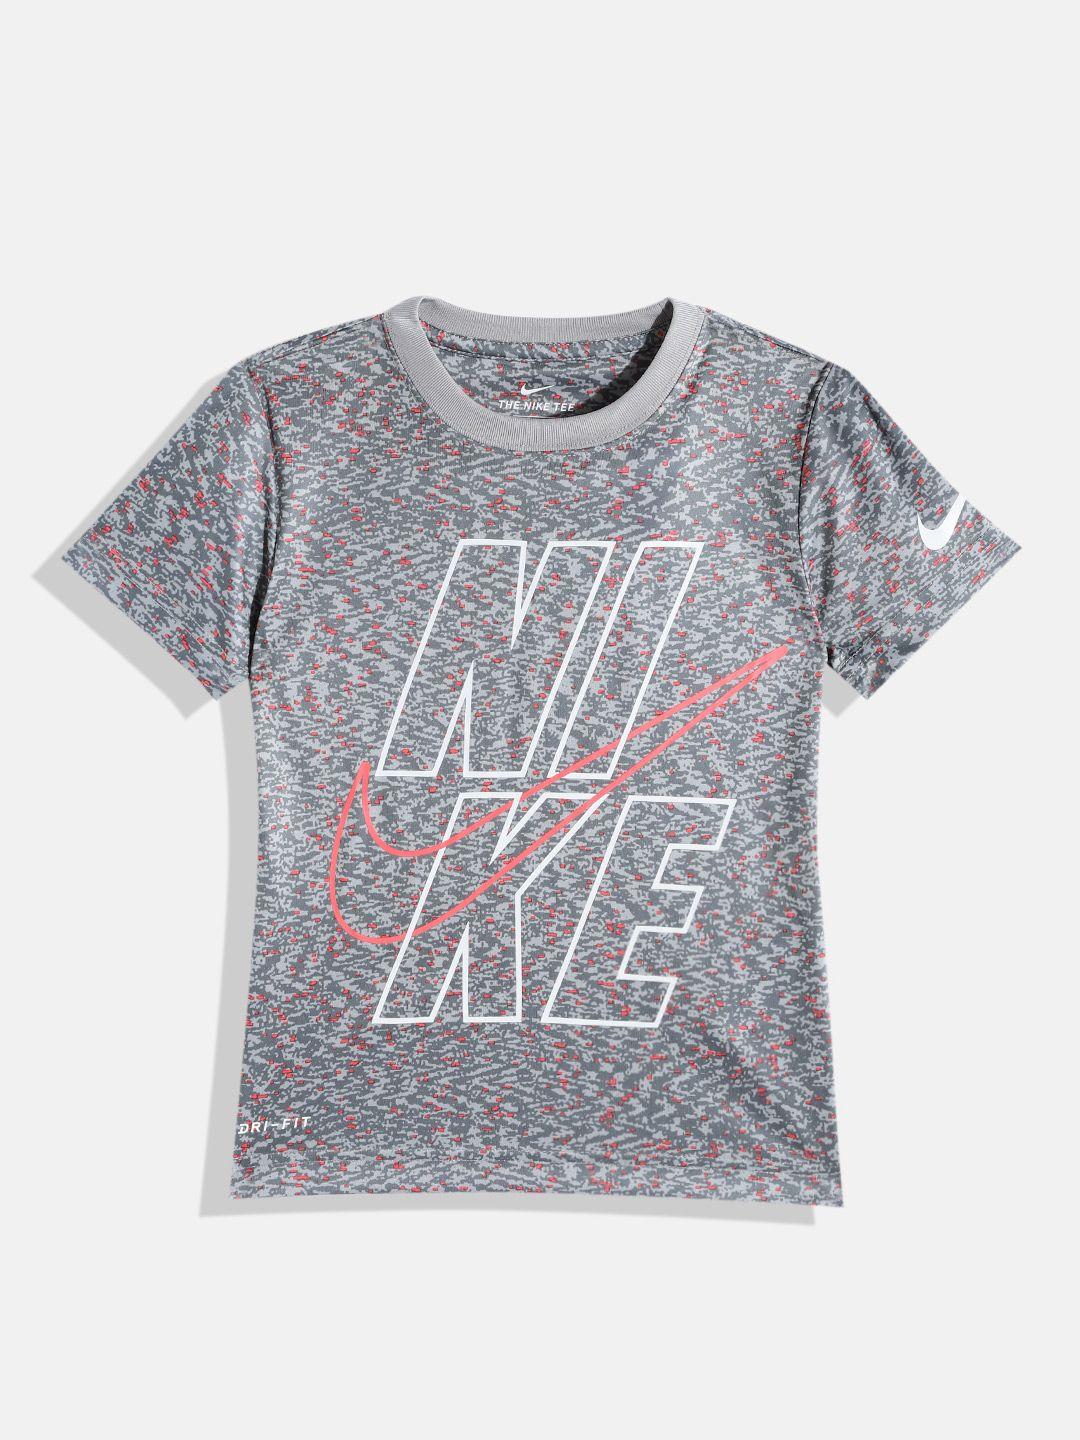 nike boys grey & white brand logo printed t-shirt